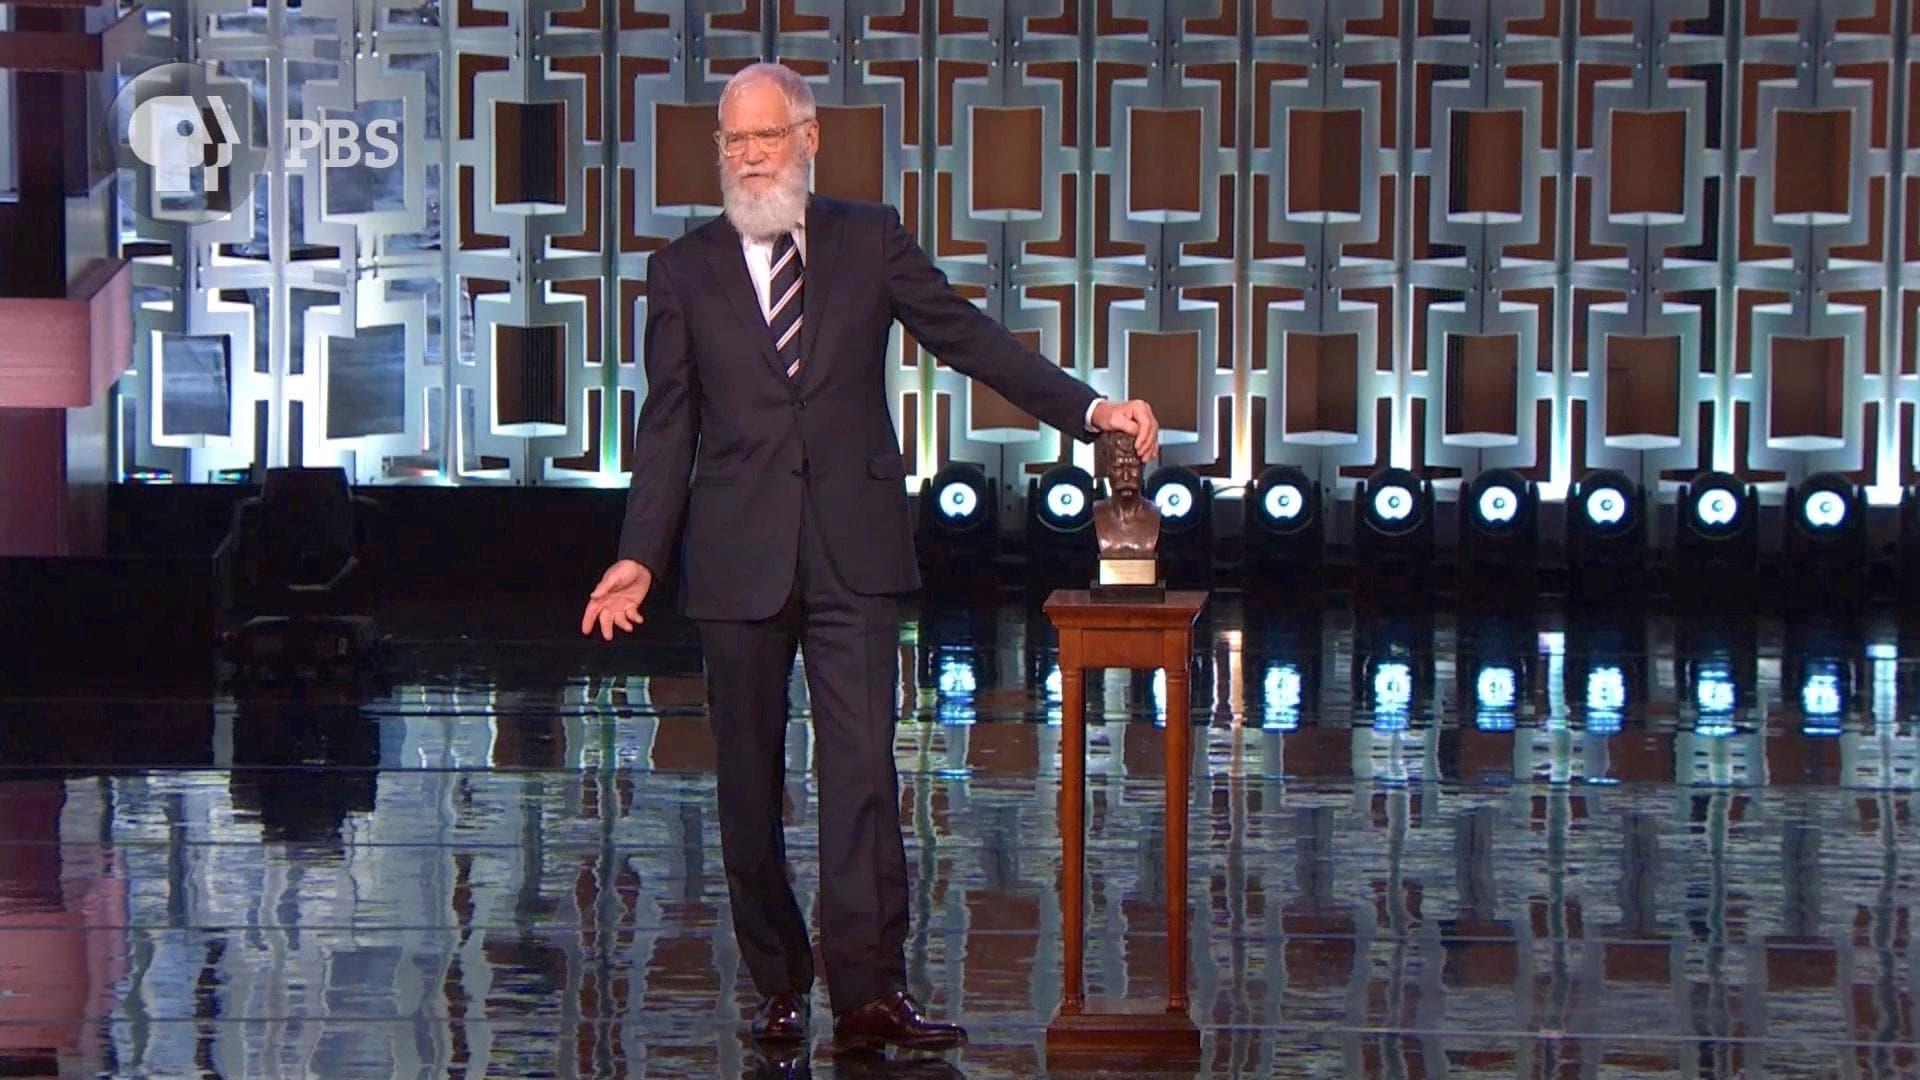 David Letterman: The Kennedy Center Mark Twain Prize backdrop